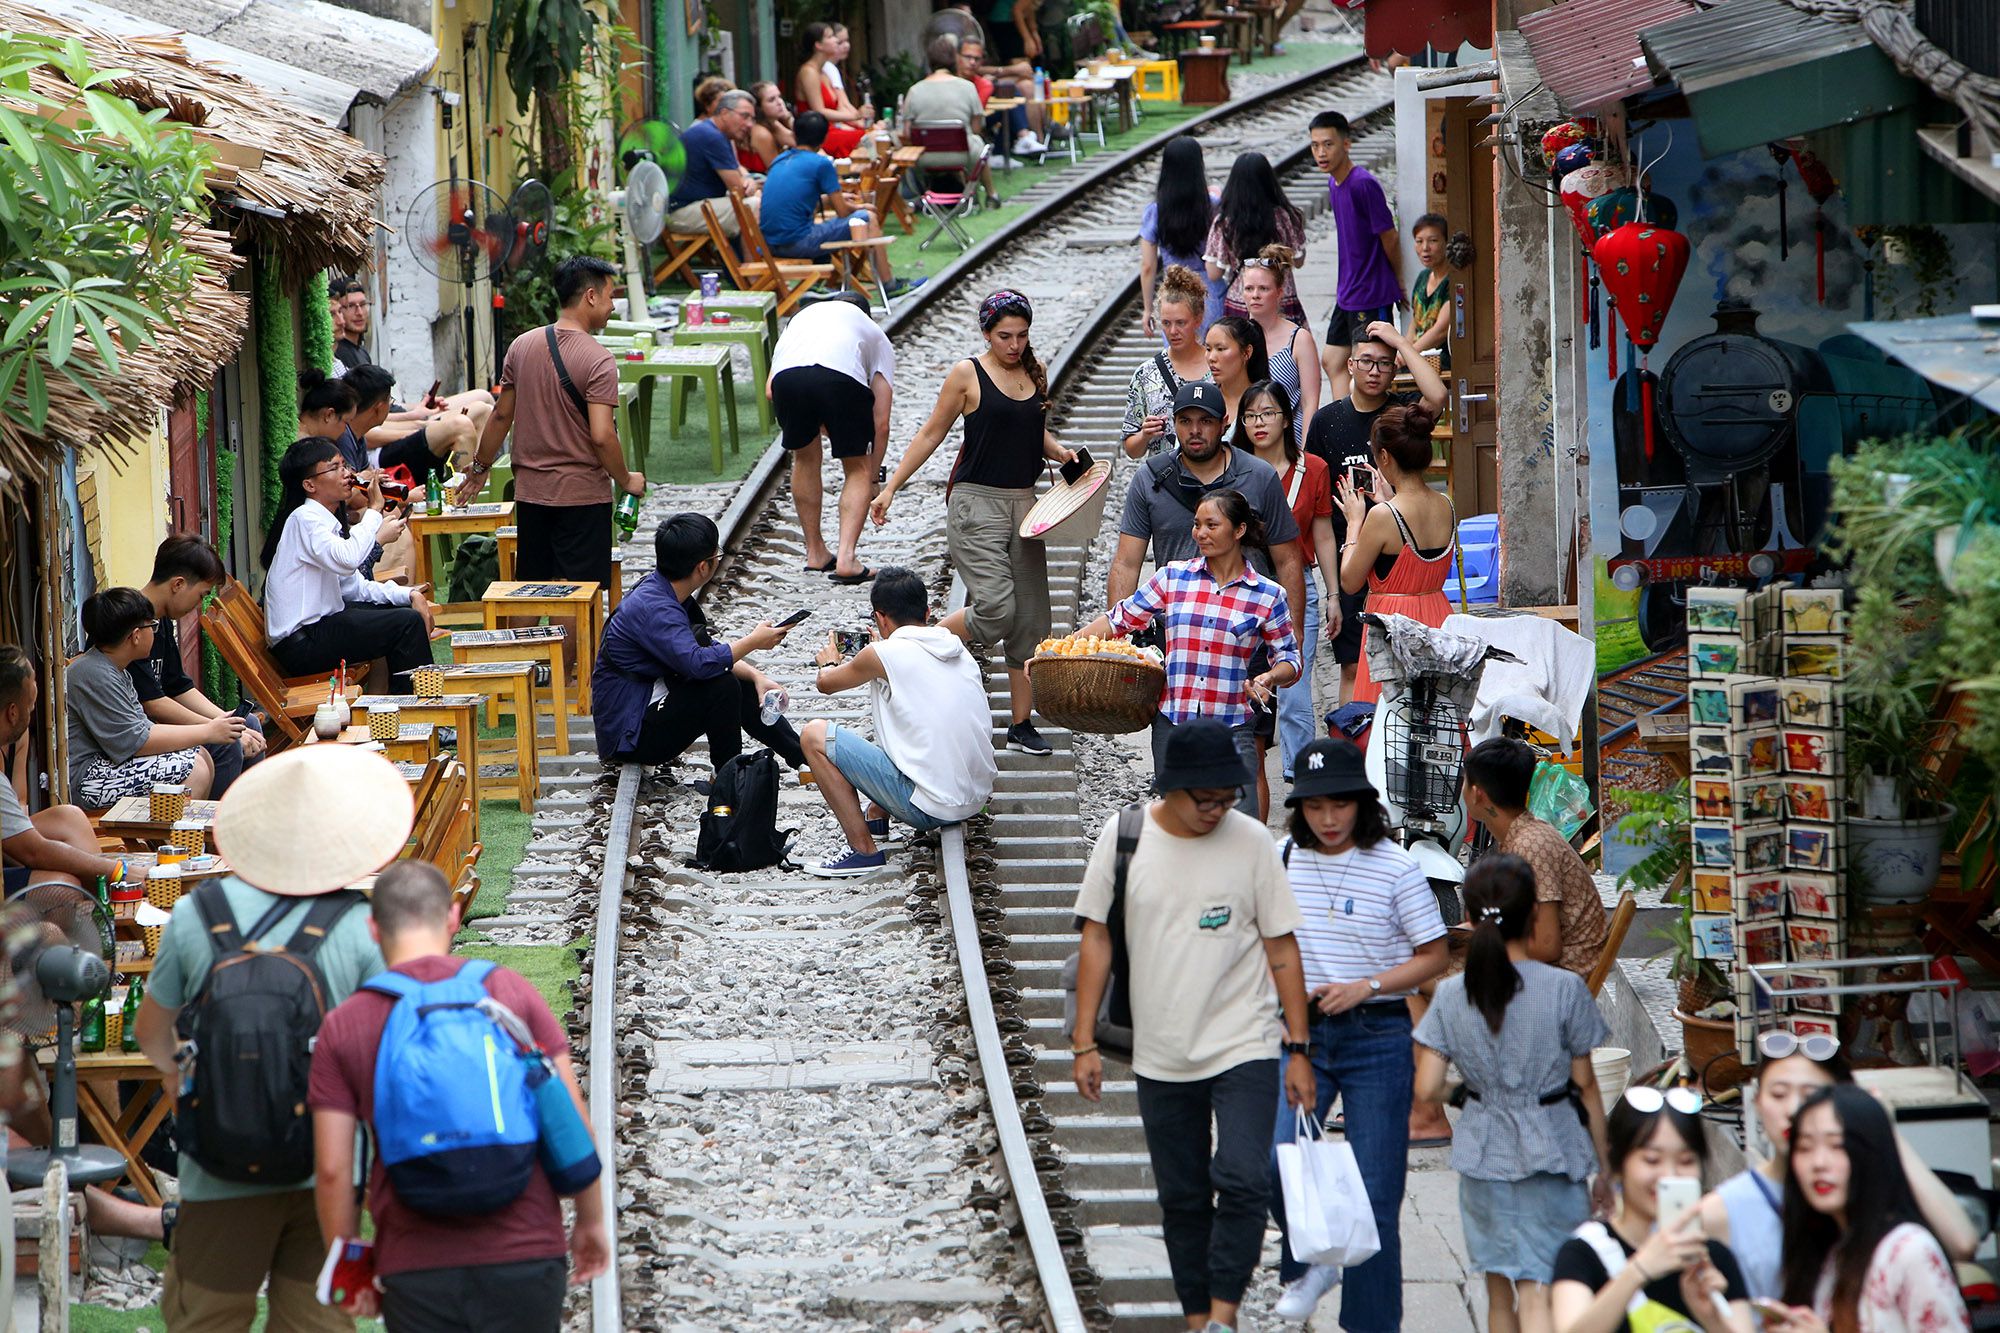 Hanoi railway becomes tourist destination despite dangers